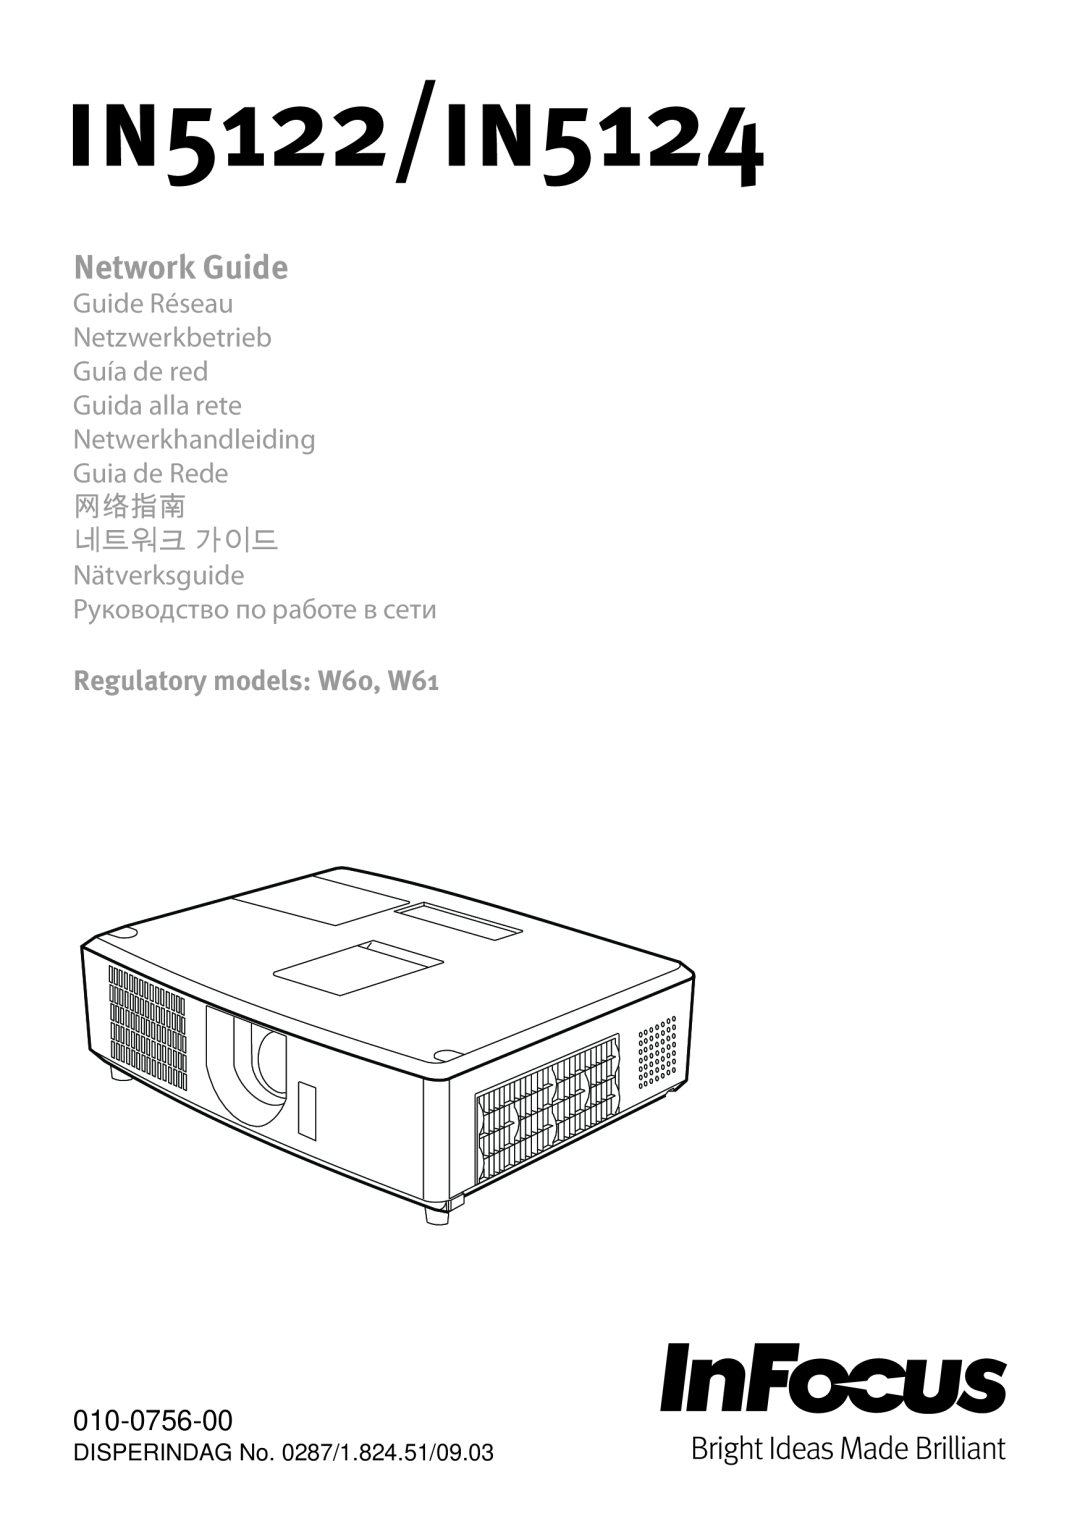 InFocus manual Network Guide, Guide Réseau Netzwerkbetrieb Guía de red Guida alla rete, Regulatory models W60, W61 